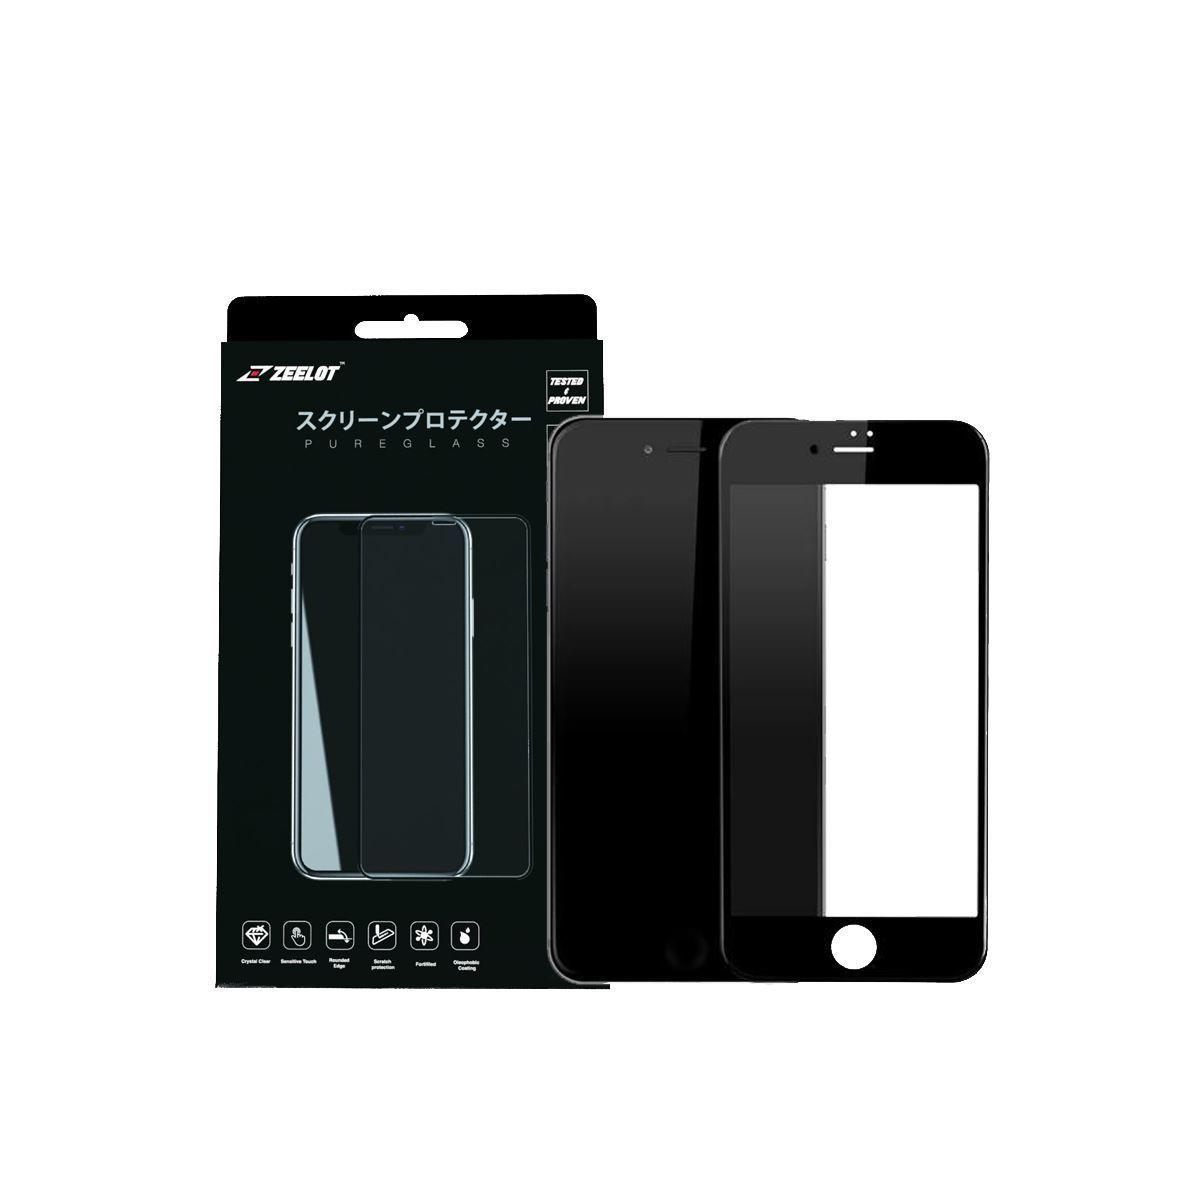 ZEELOT PureGlass 2.5D Tempered Glass Screen Protector for iPhone 8/7 4.7" (2017/2016), Black Tempered Glass ZEELOT 